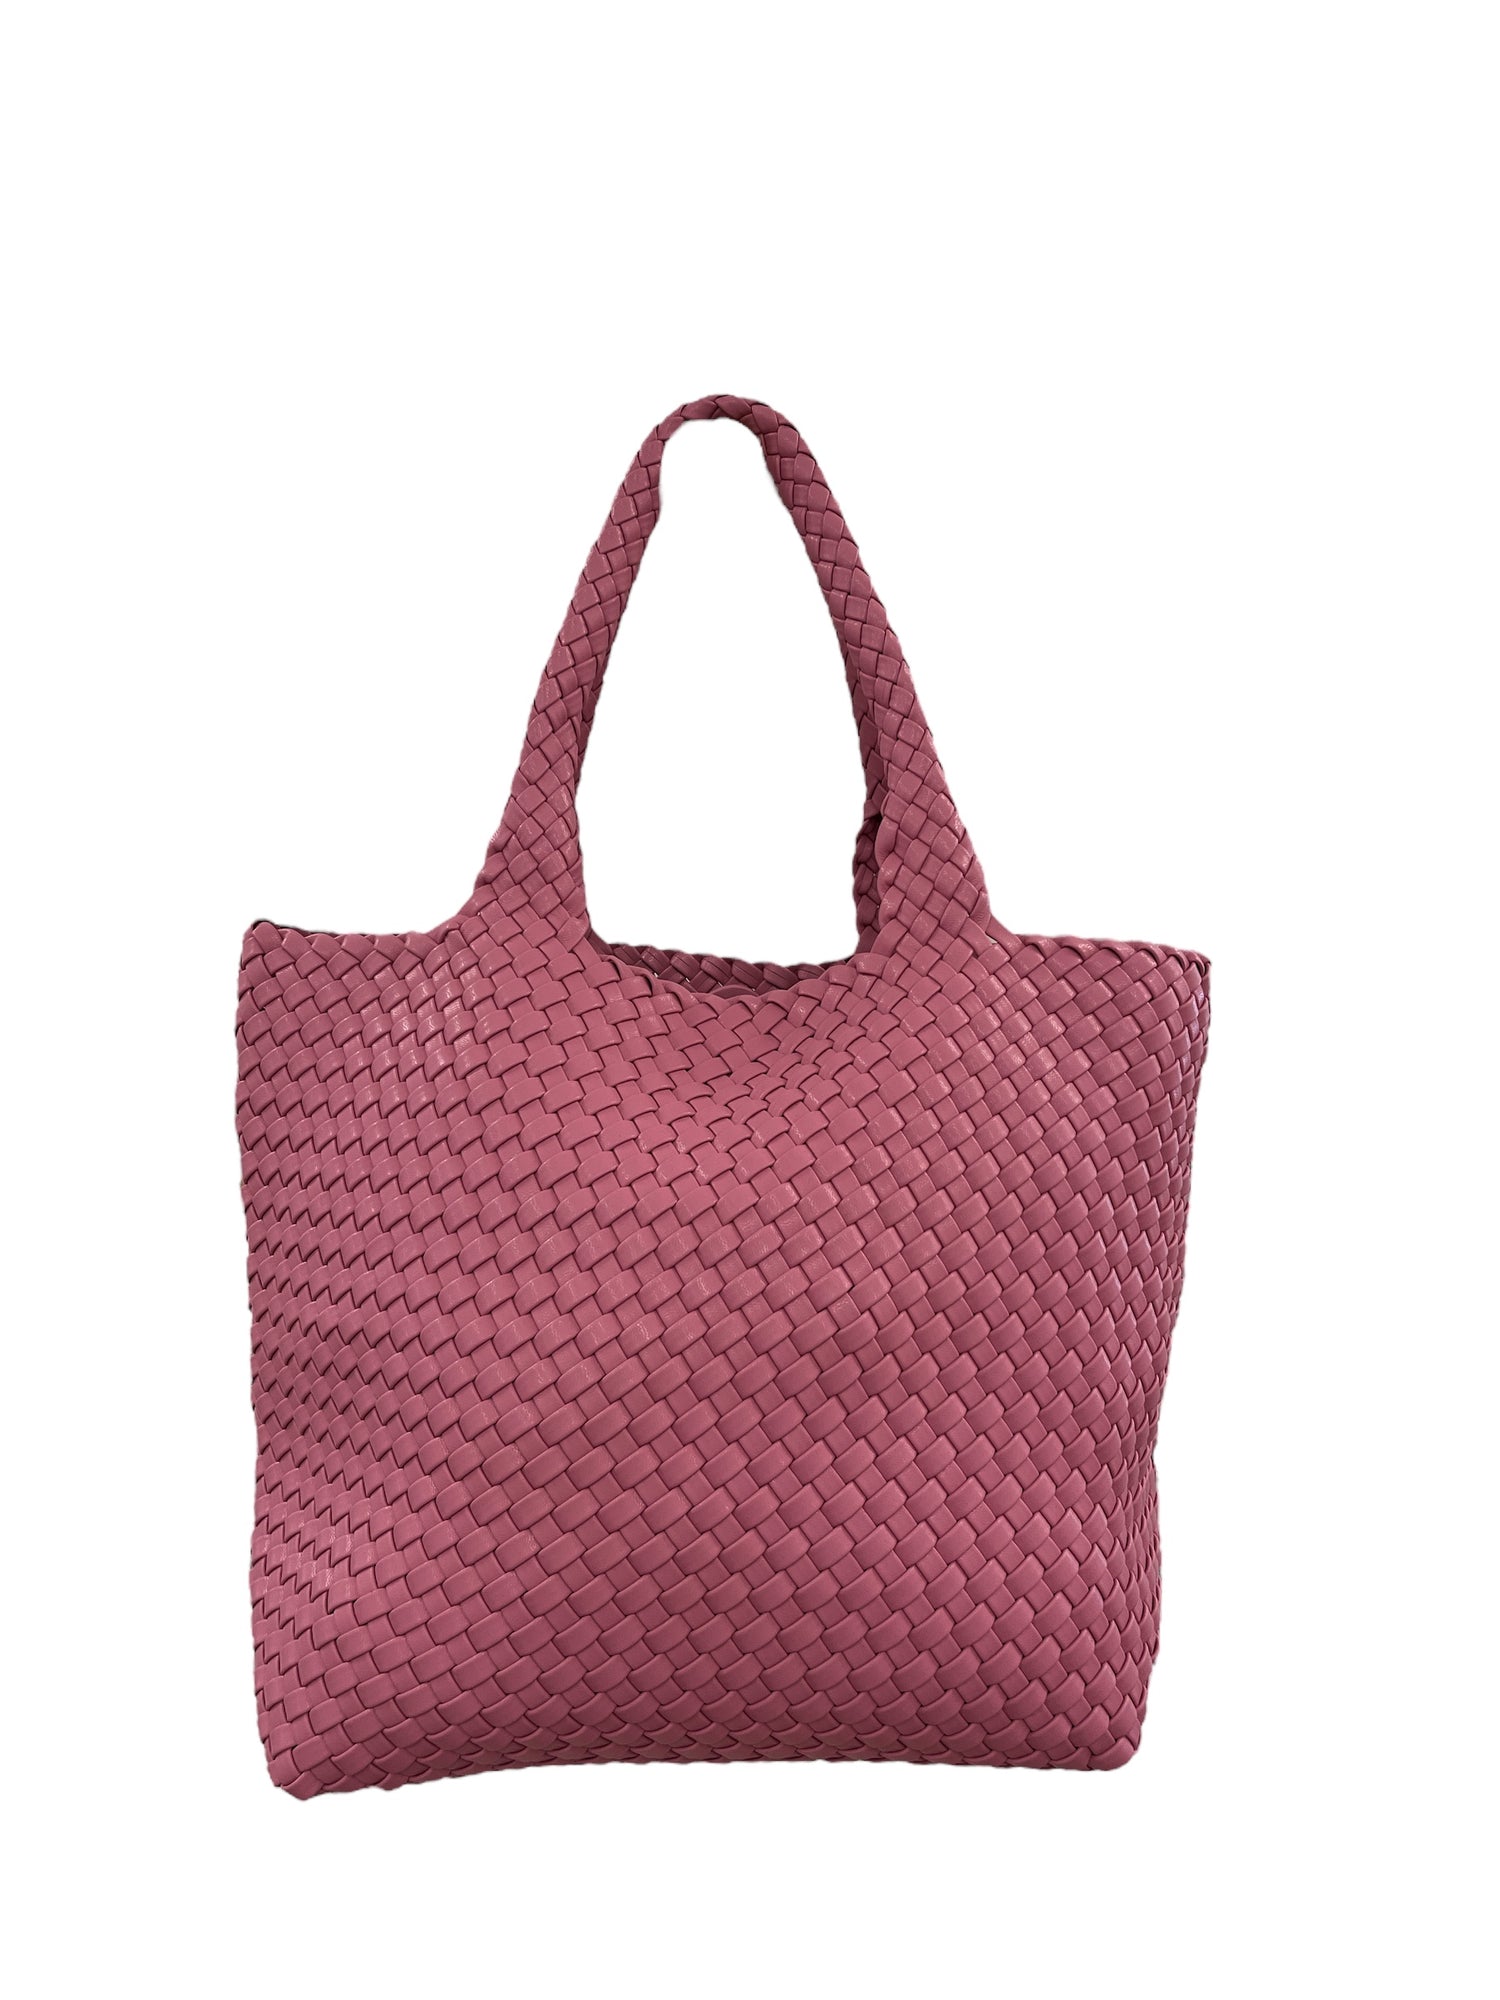 Bc Handbags | Weave Handbag